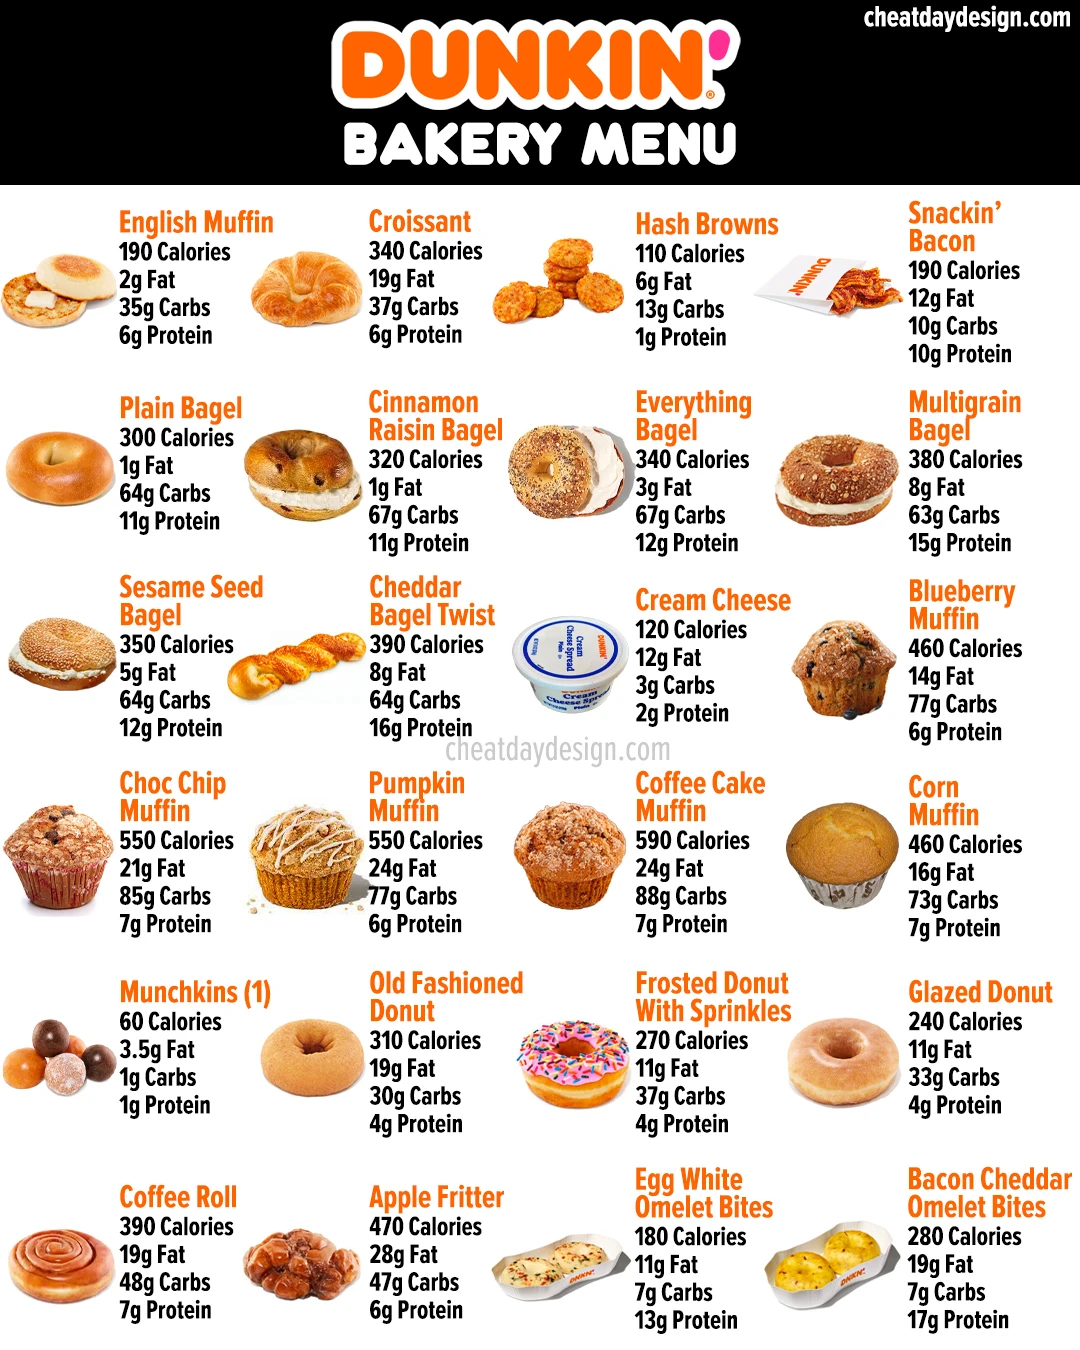 dunkin donuts cream calories